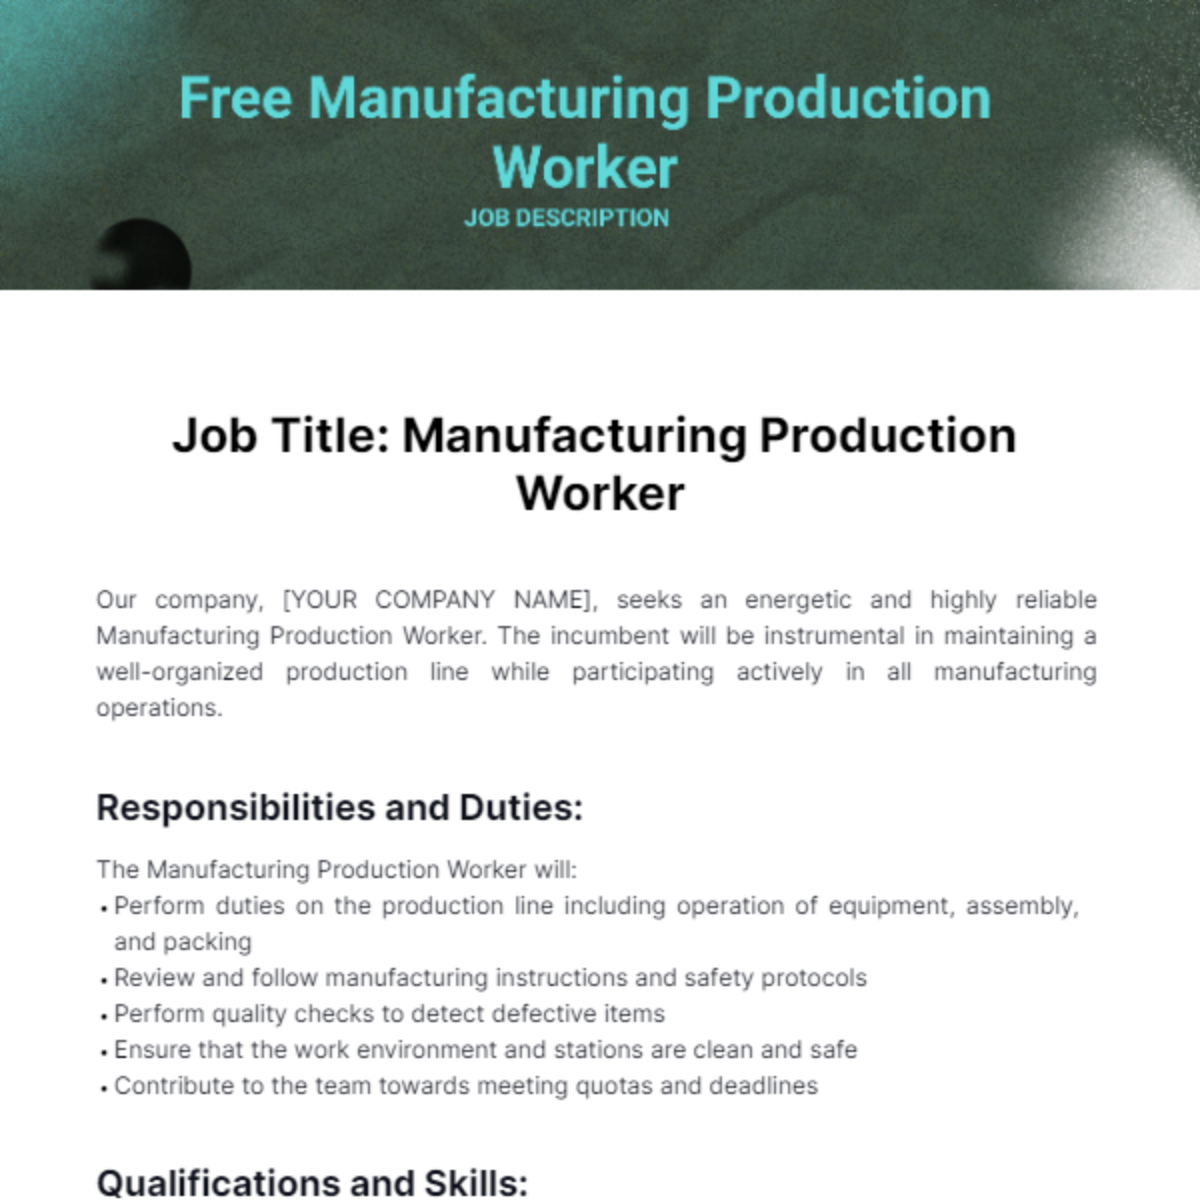 Free Manufacturing Production Worker Job Description Template